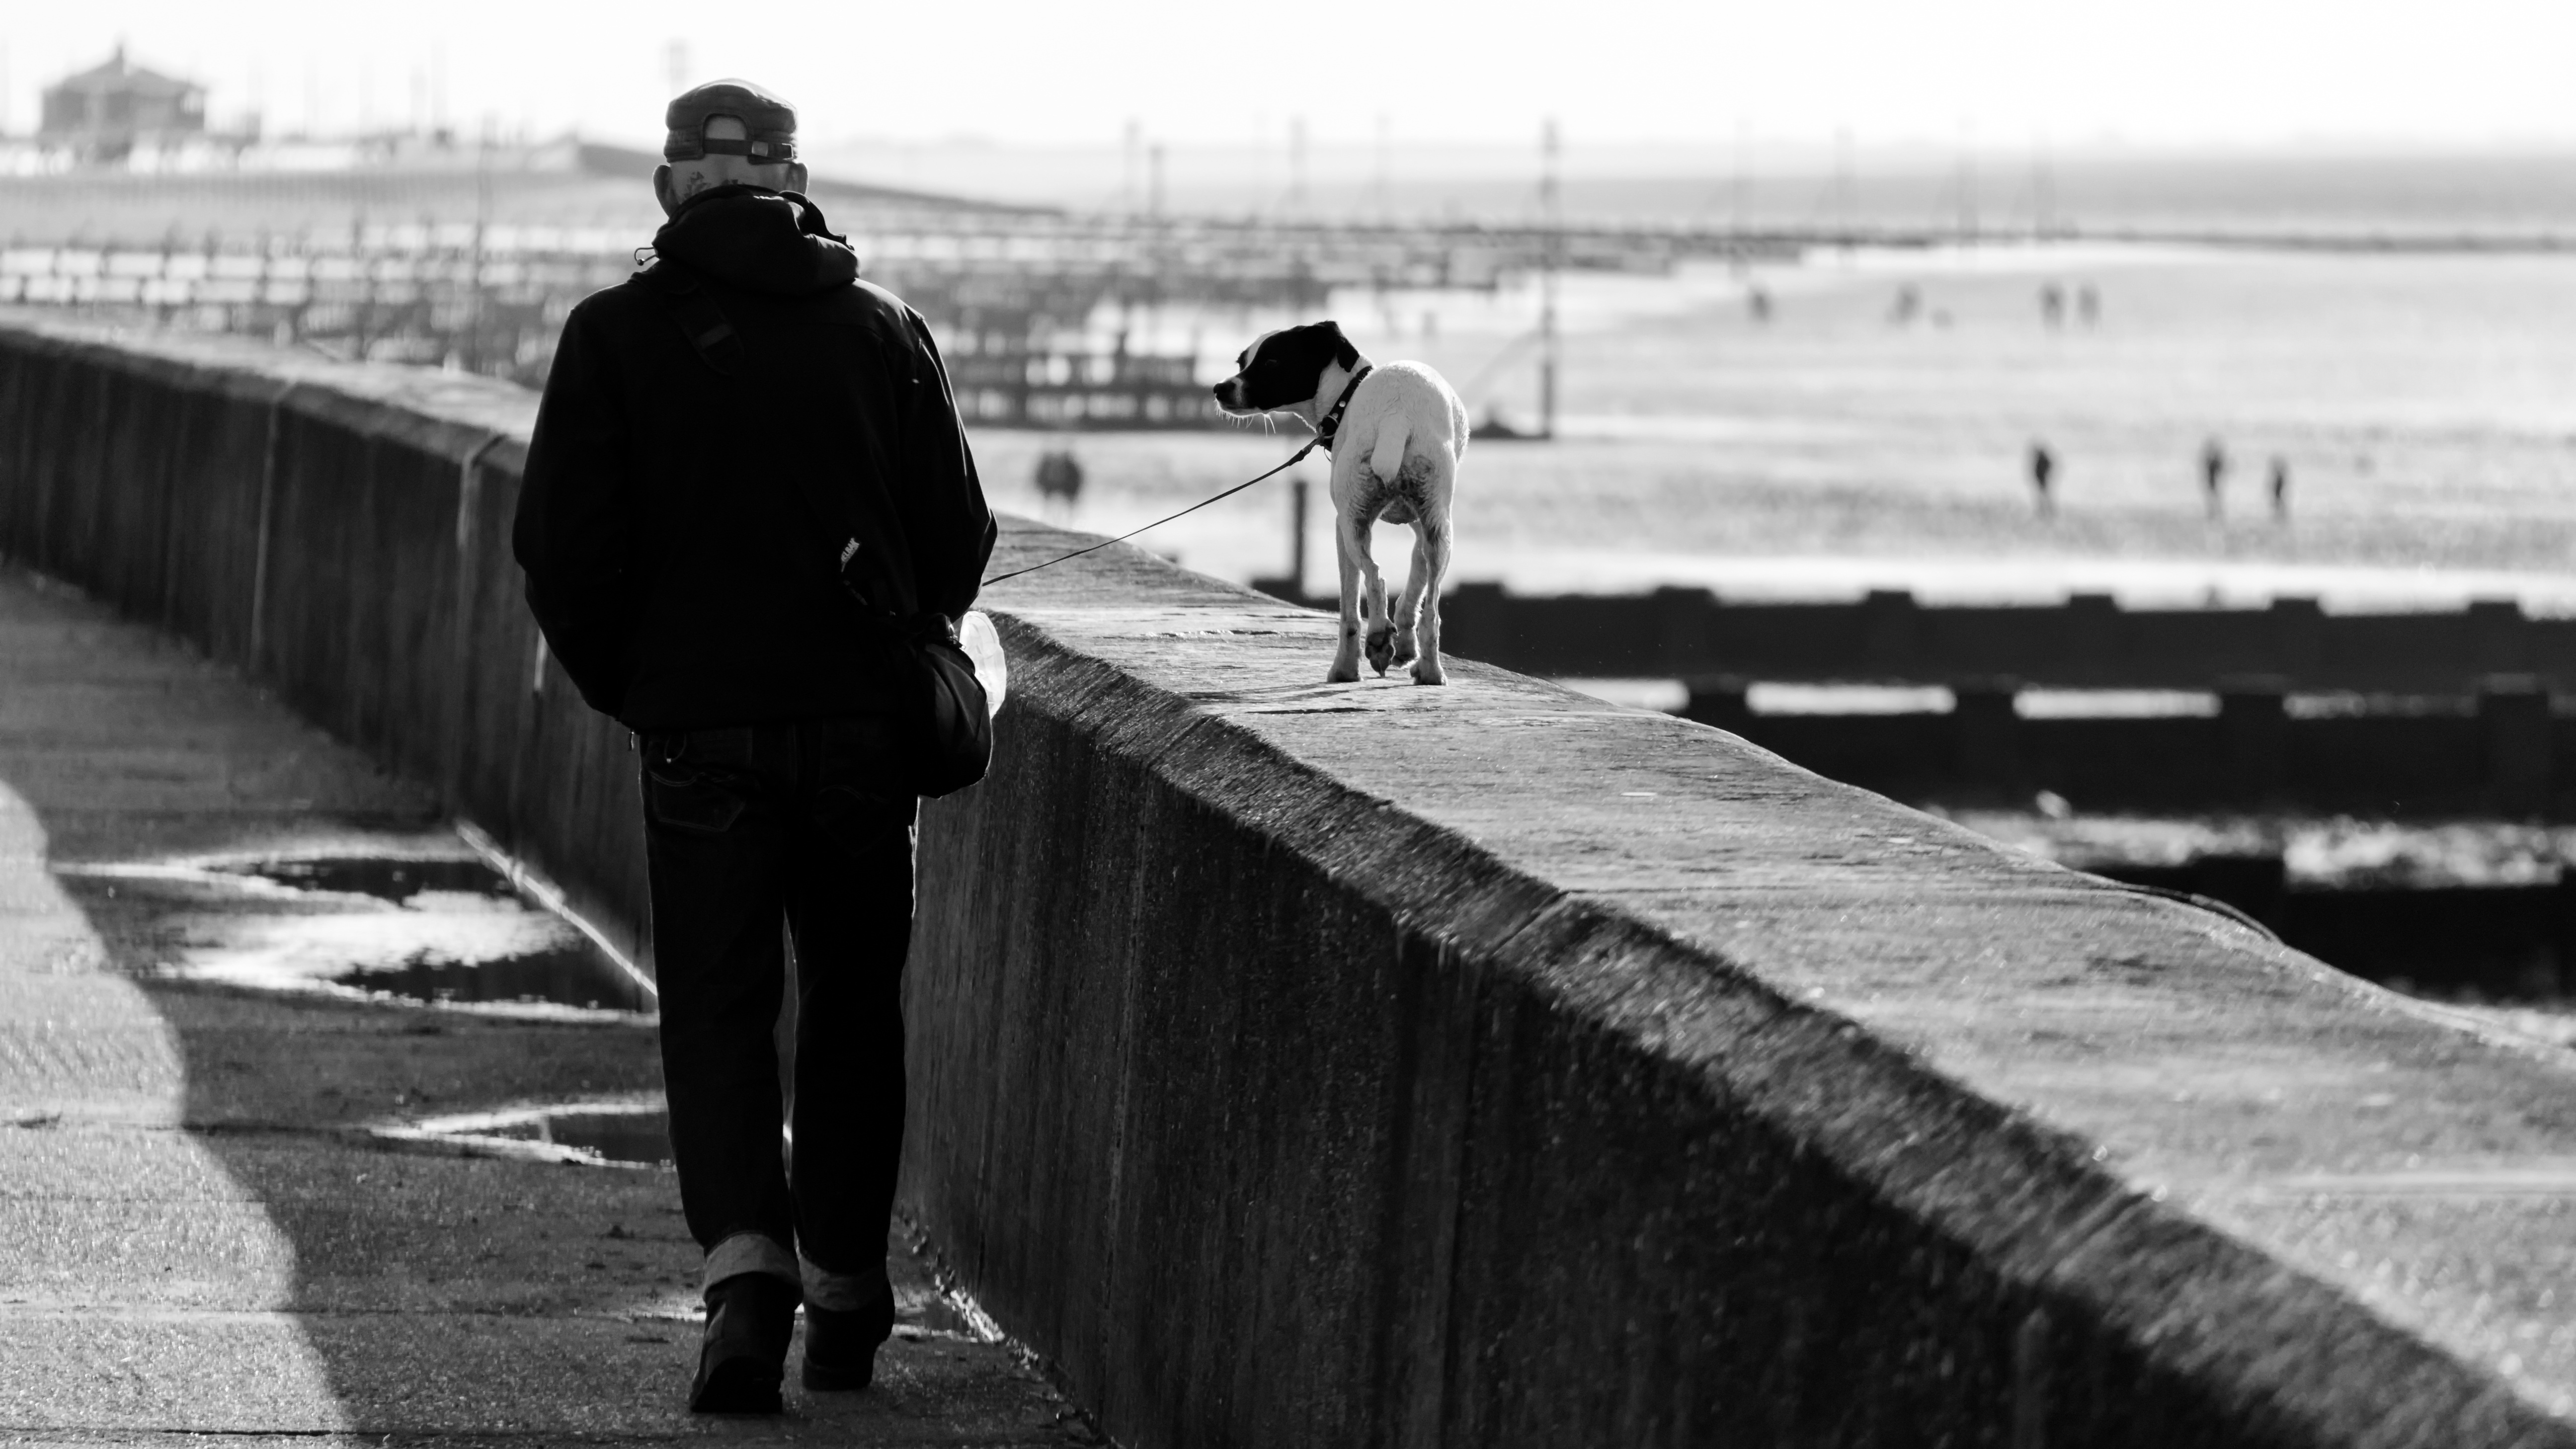 Man and faithful companion taking a walk in Hunstanton England by MarkTimberlake